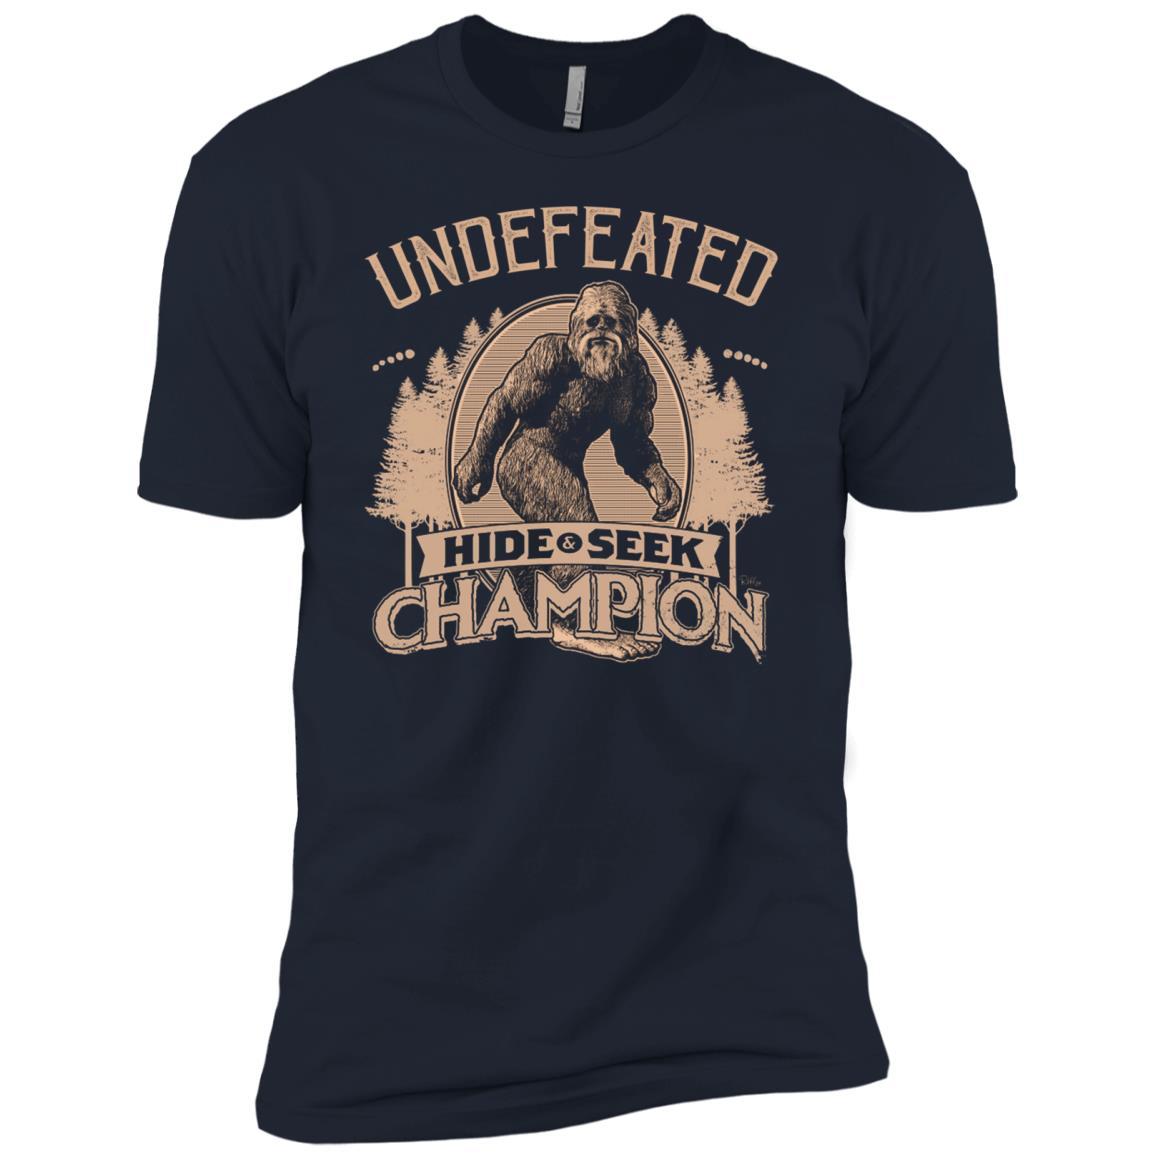 bigfoot hide and seek champion shirt